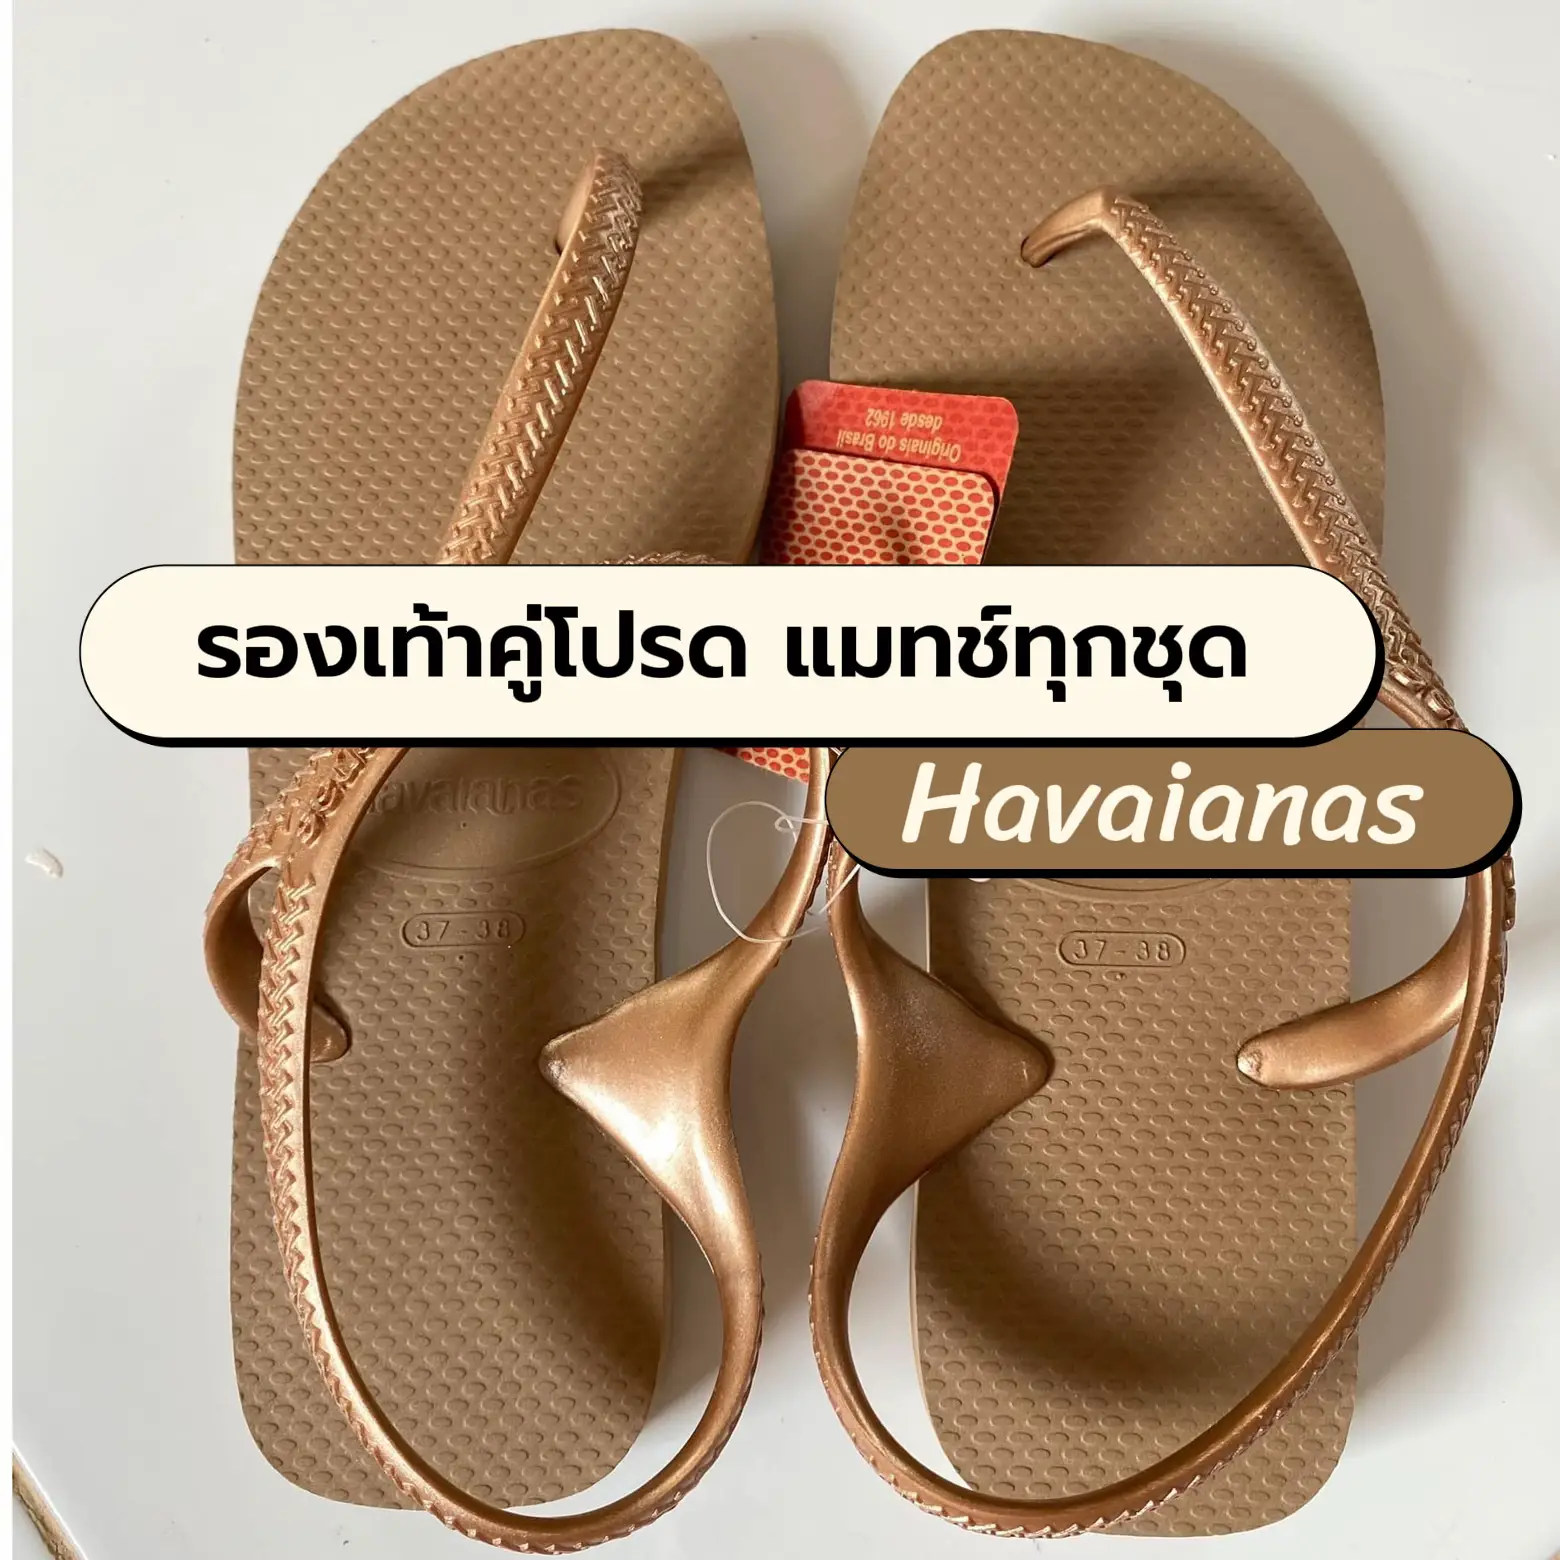 Year-Round Comfort with Havaianas Sandals - Blog posts